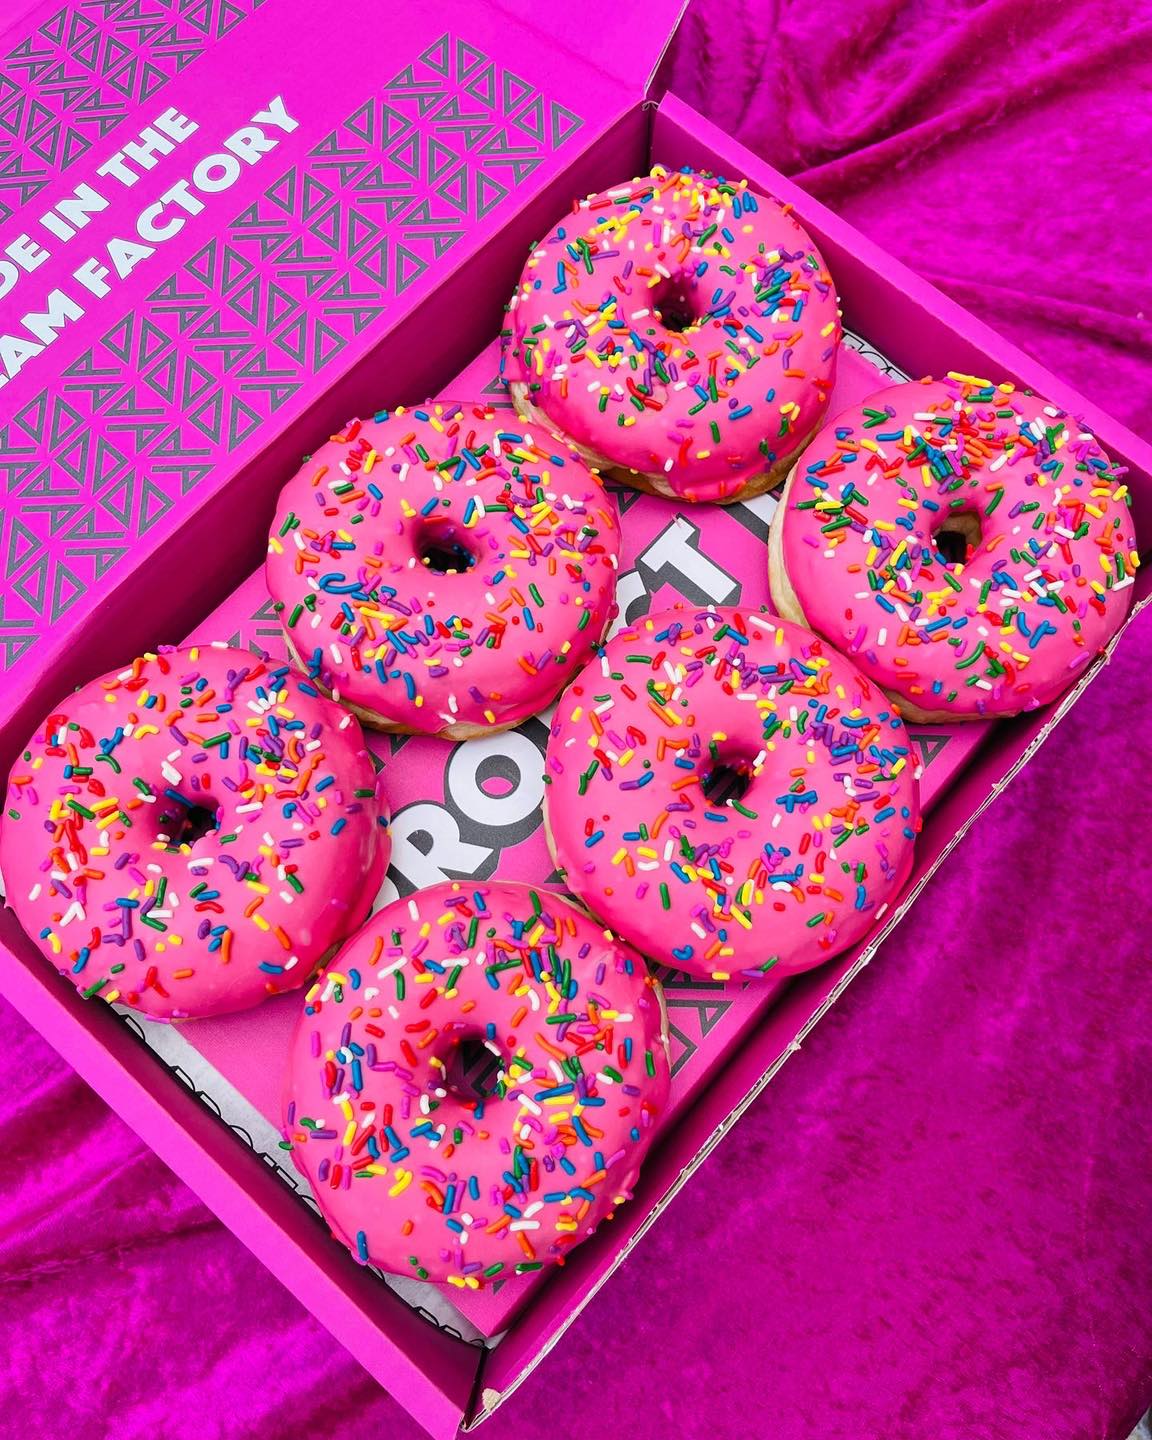 A box of doughnuts. 